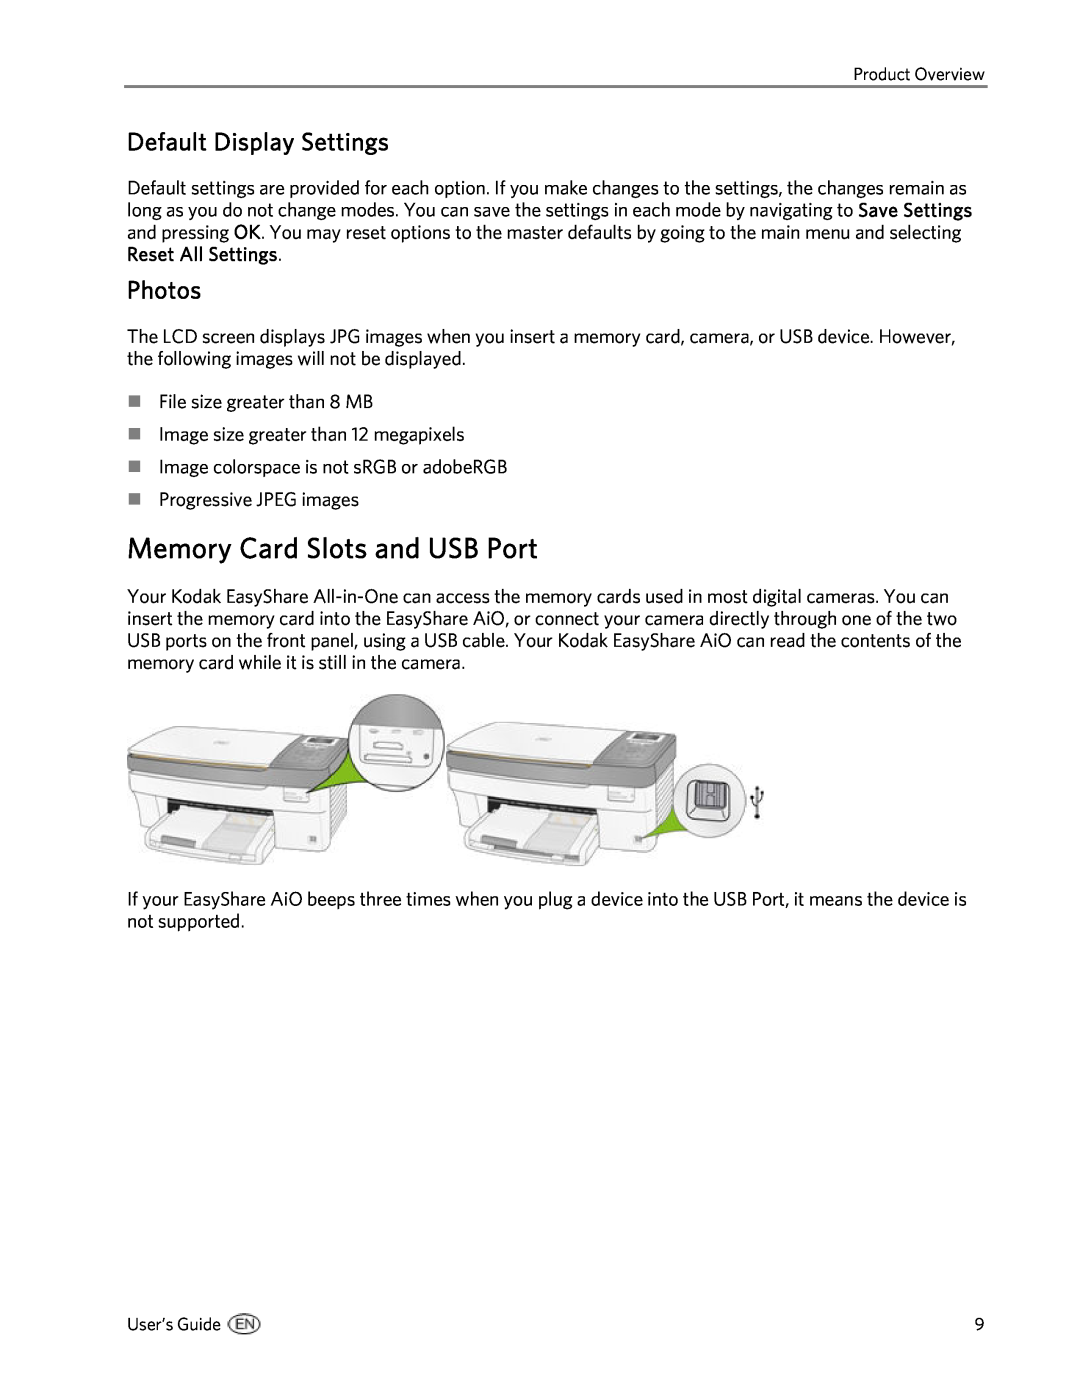 Kodak 5300 manual Memory Card Slots and USB Port, Default Display Settings, Photos 